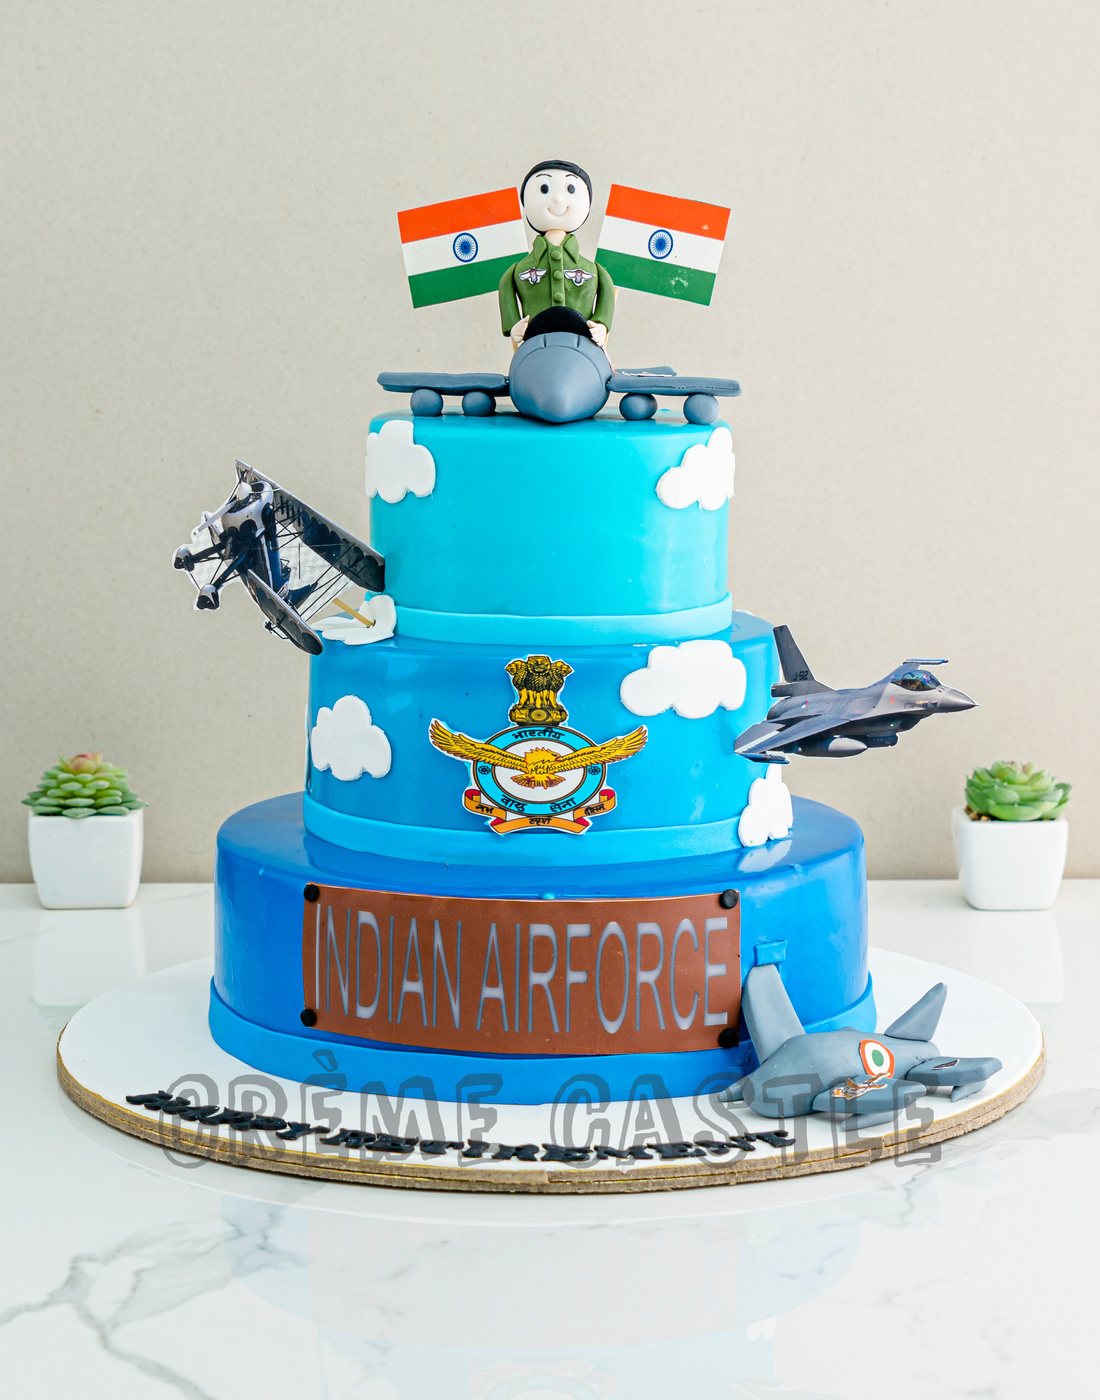 Best Retirement Theme Cake In Hyderabad | Order Online